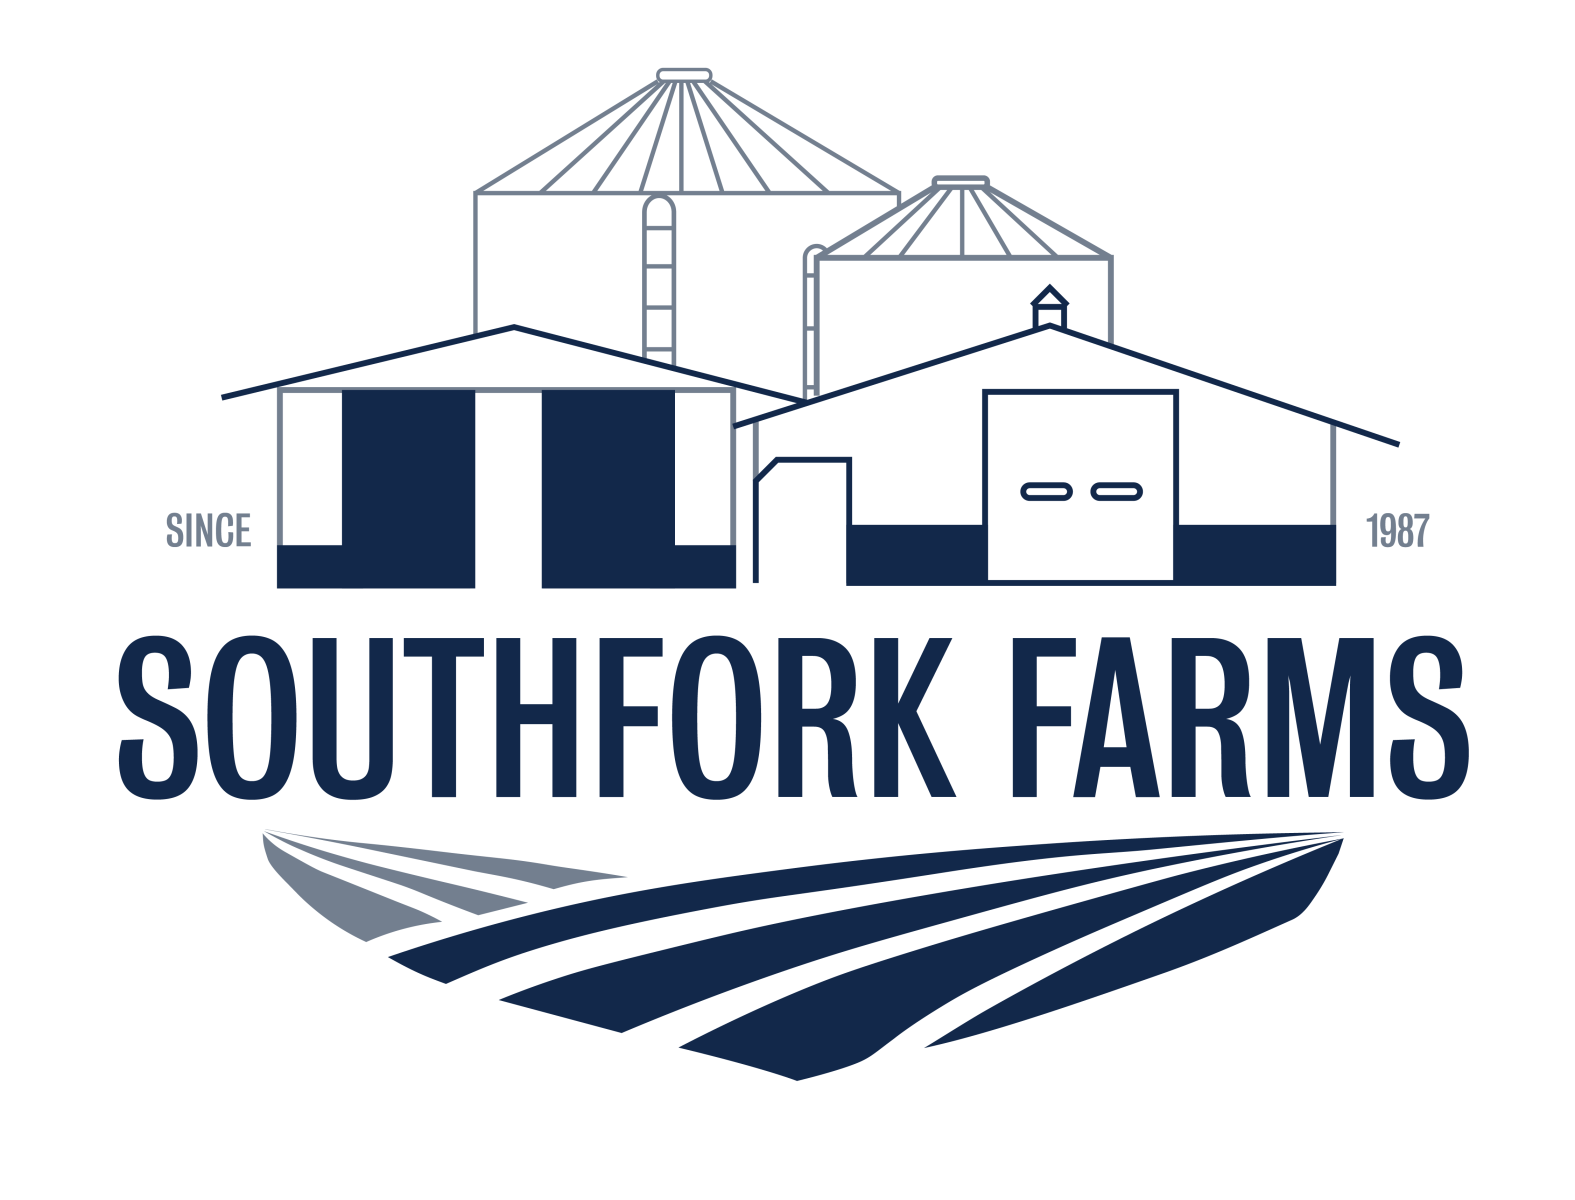 Southfork Farms Main Logo by Sydney Schmidt on Dribbble